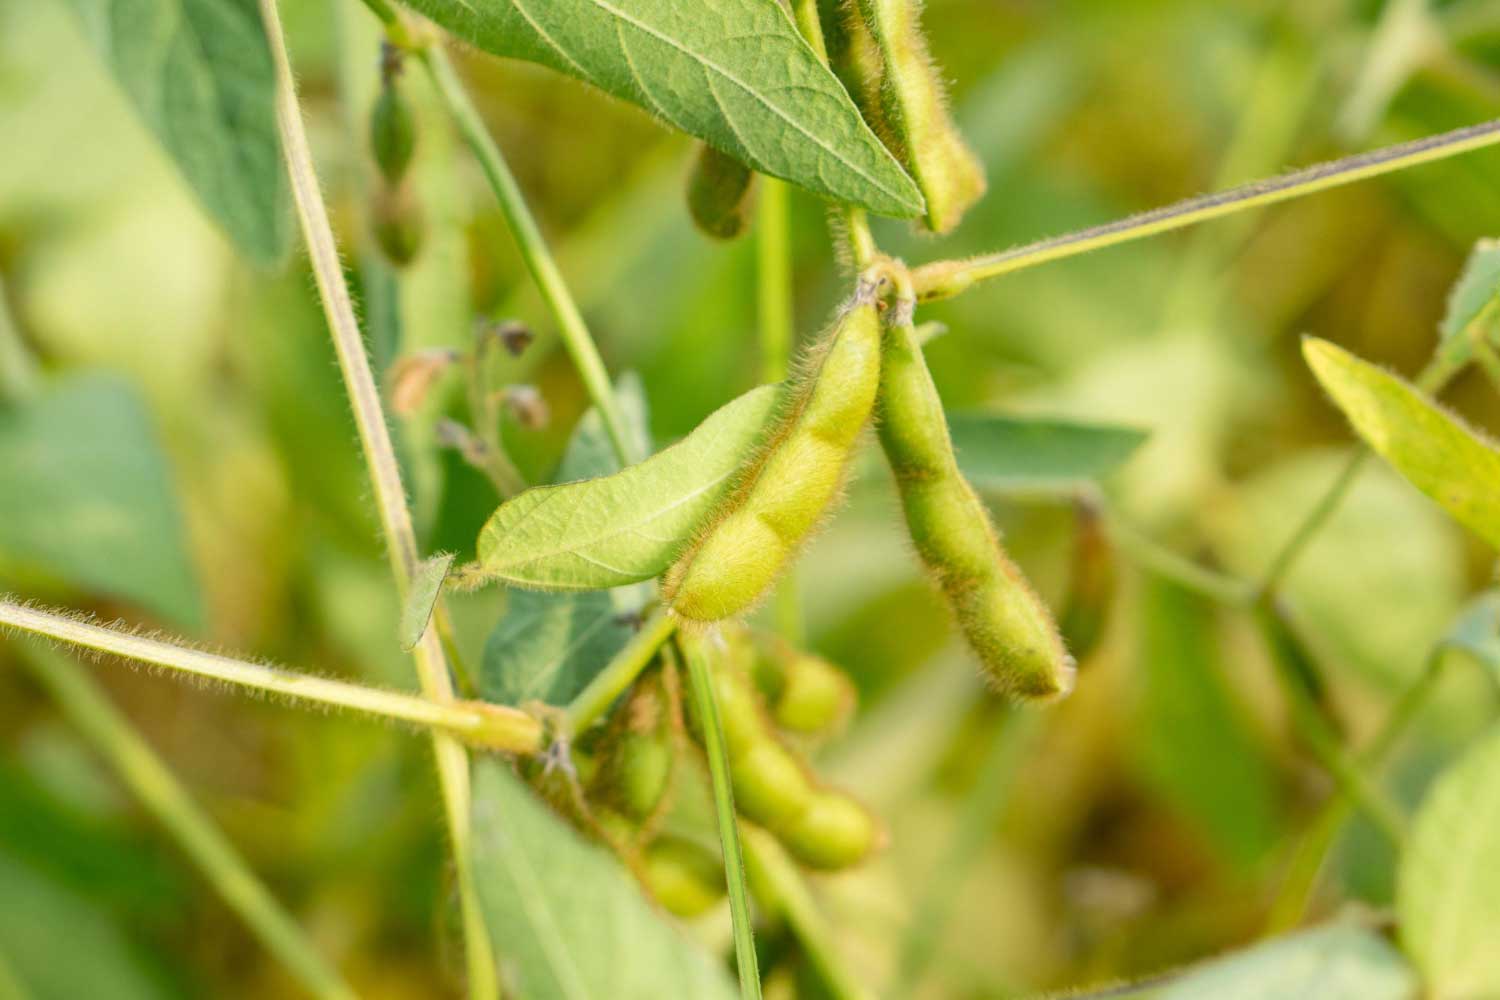 Green soy beans ready on a farmer's field